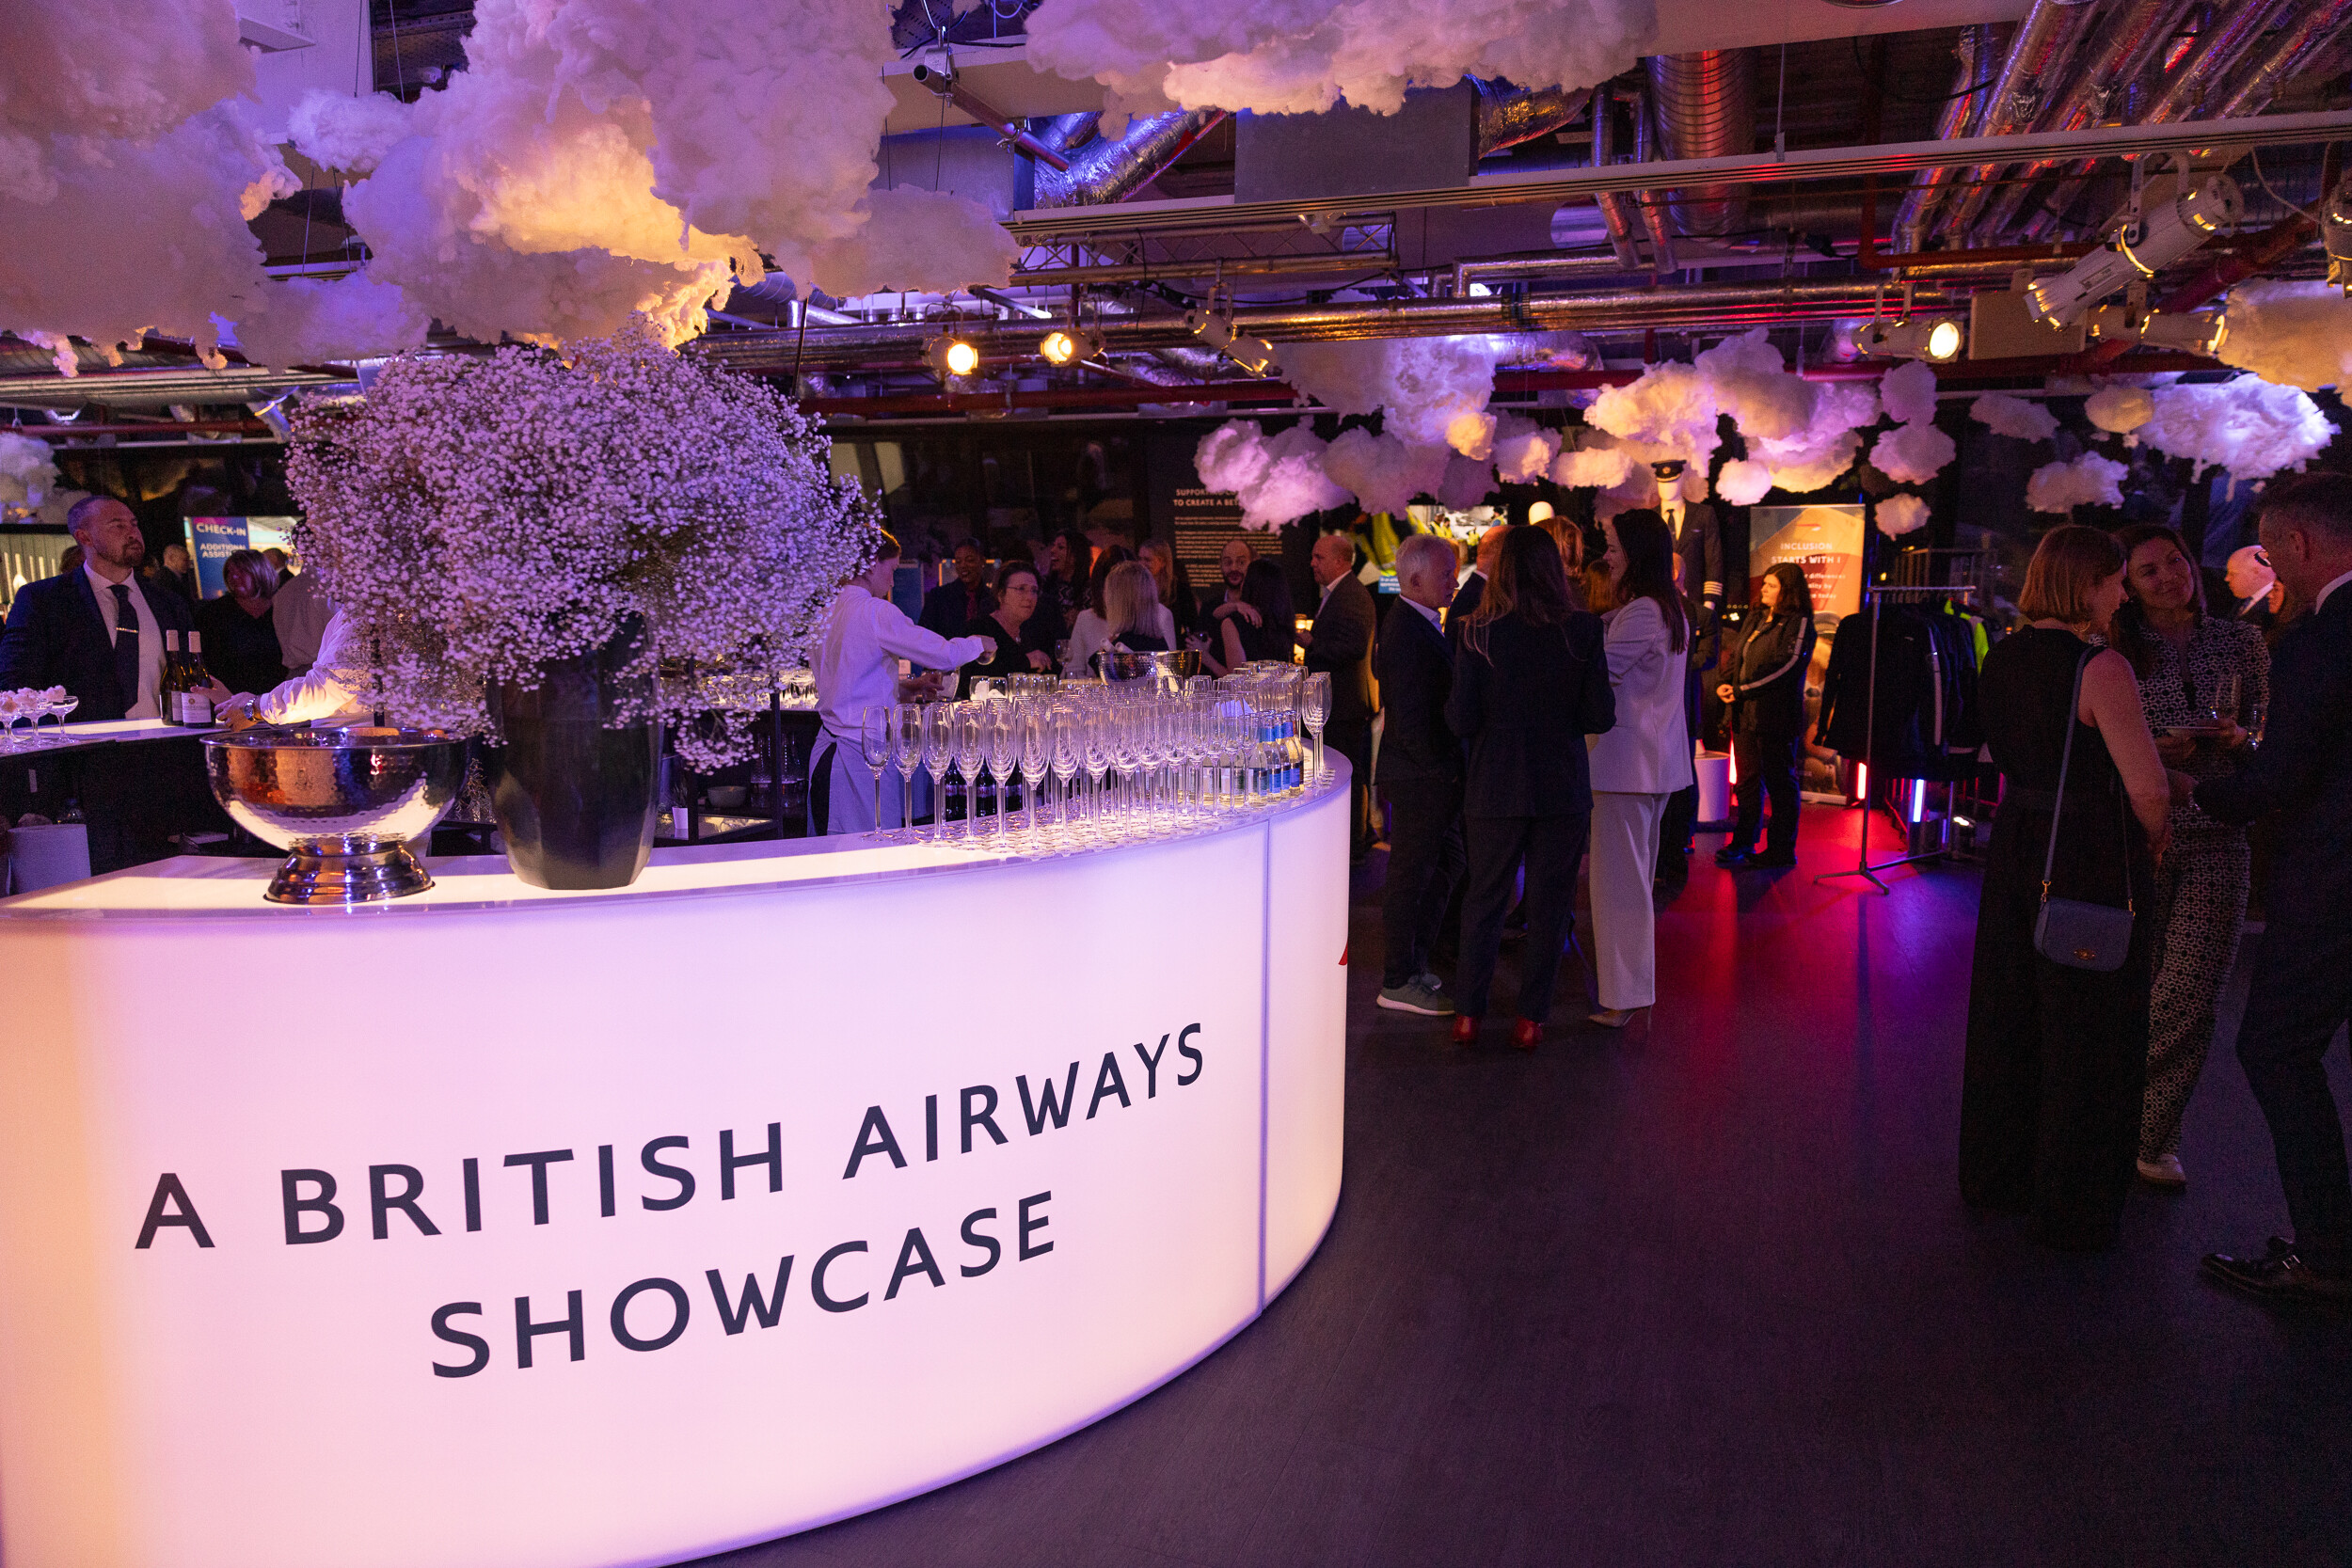 The British Airways showcase event